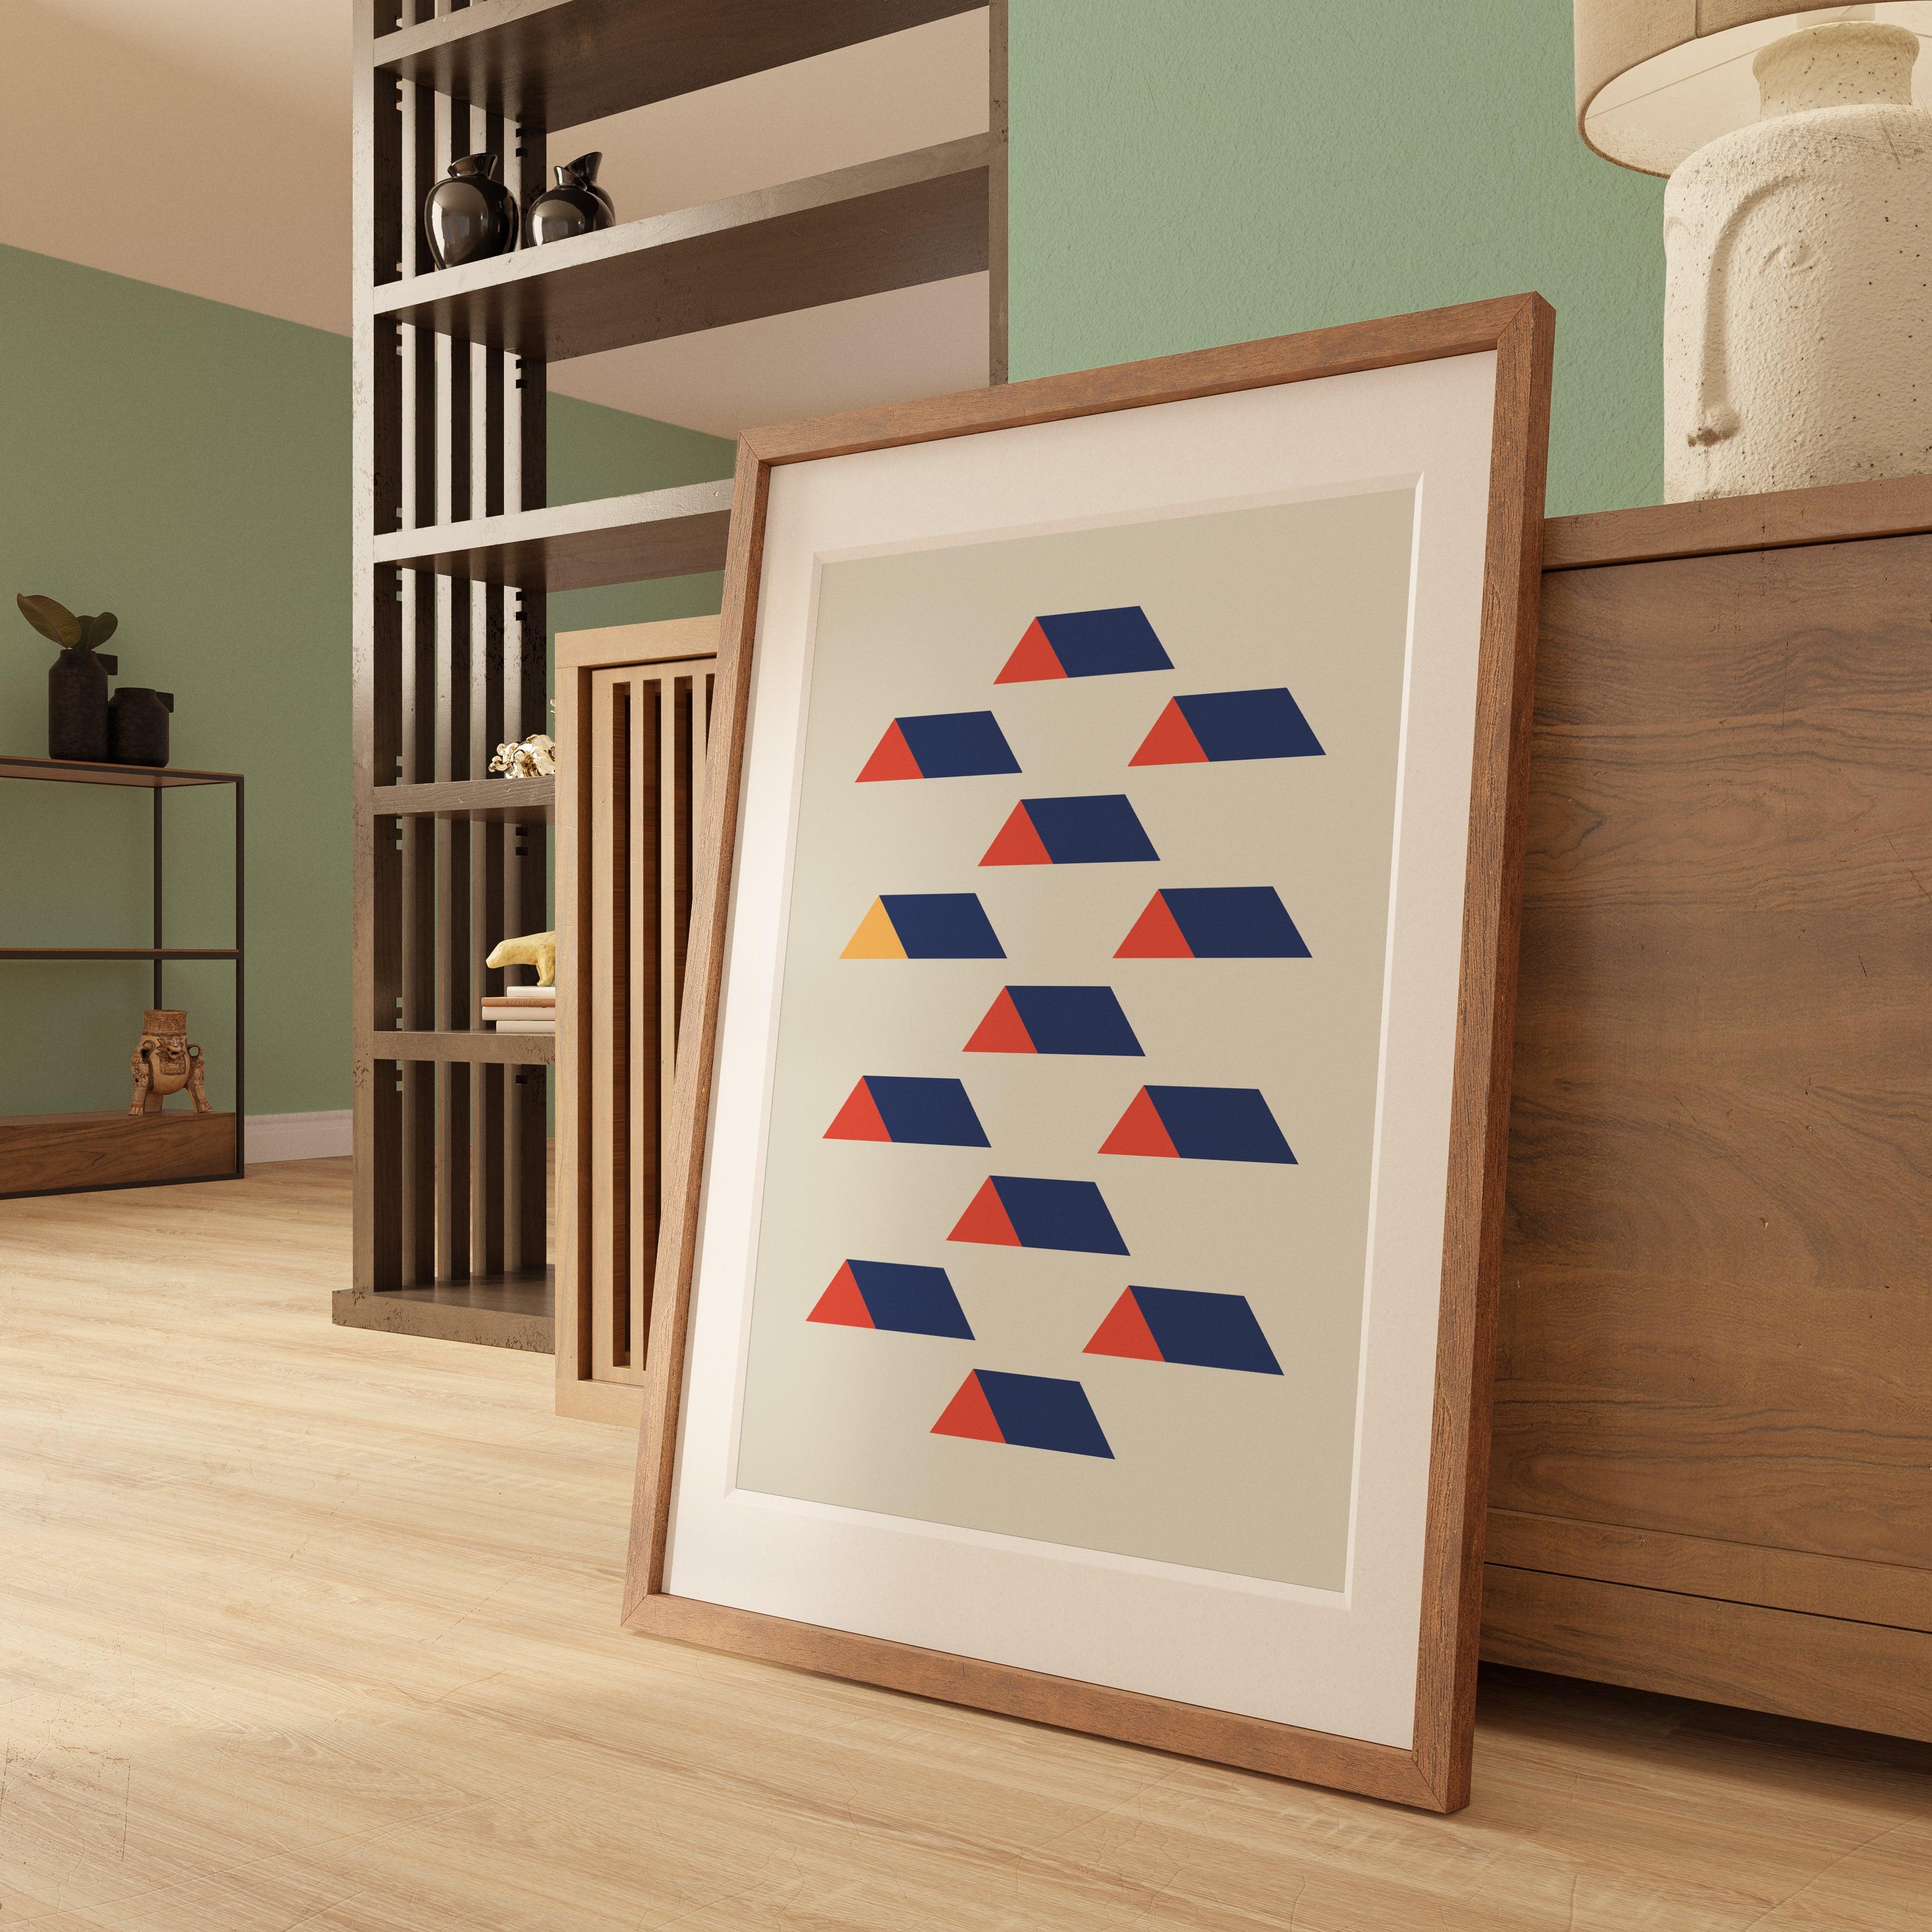 Bauhaus Red & Blue Triangles - stravee - Wall Art Print